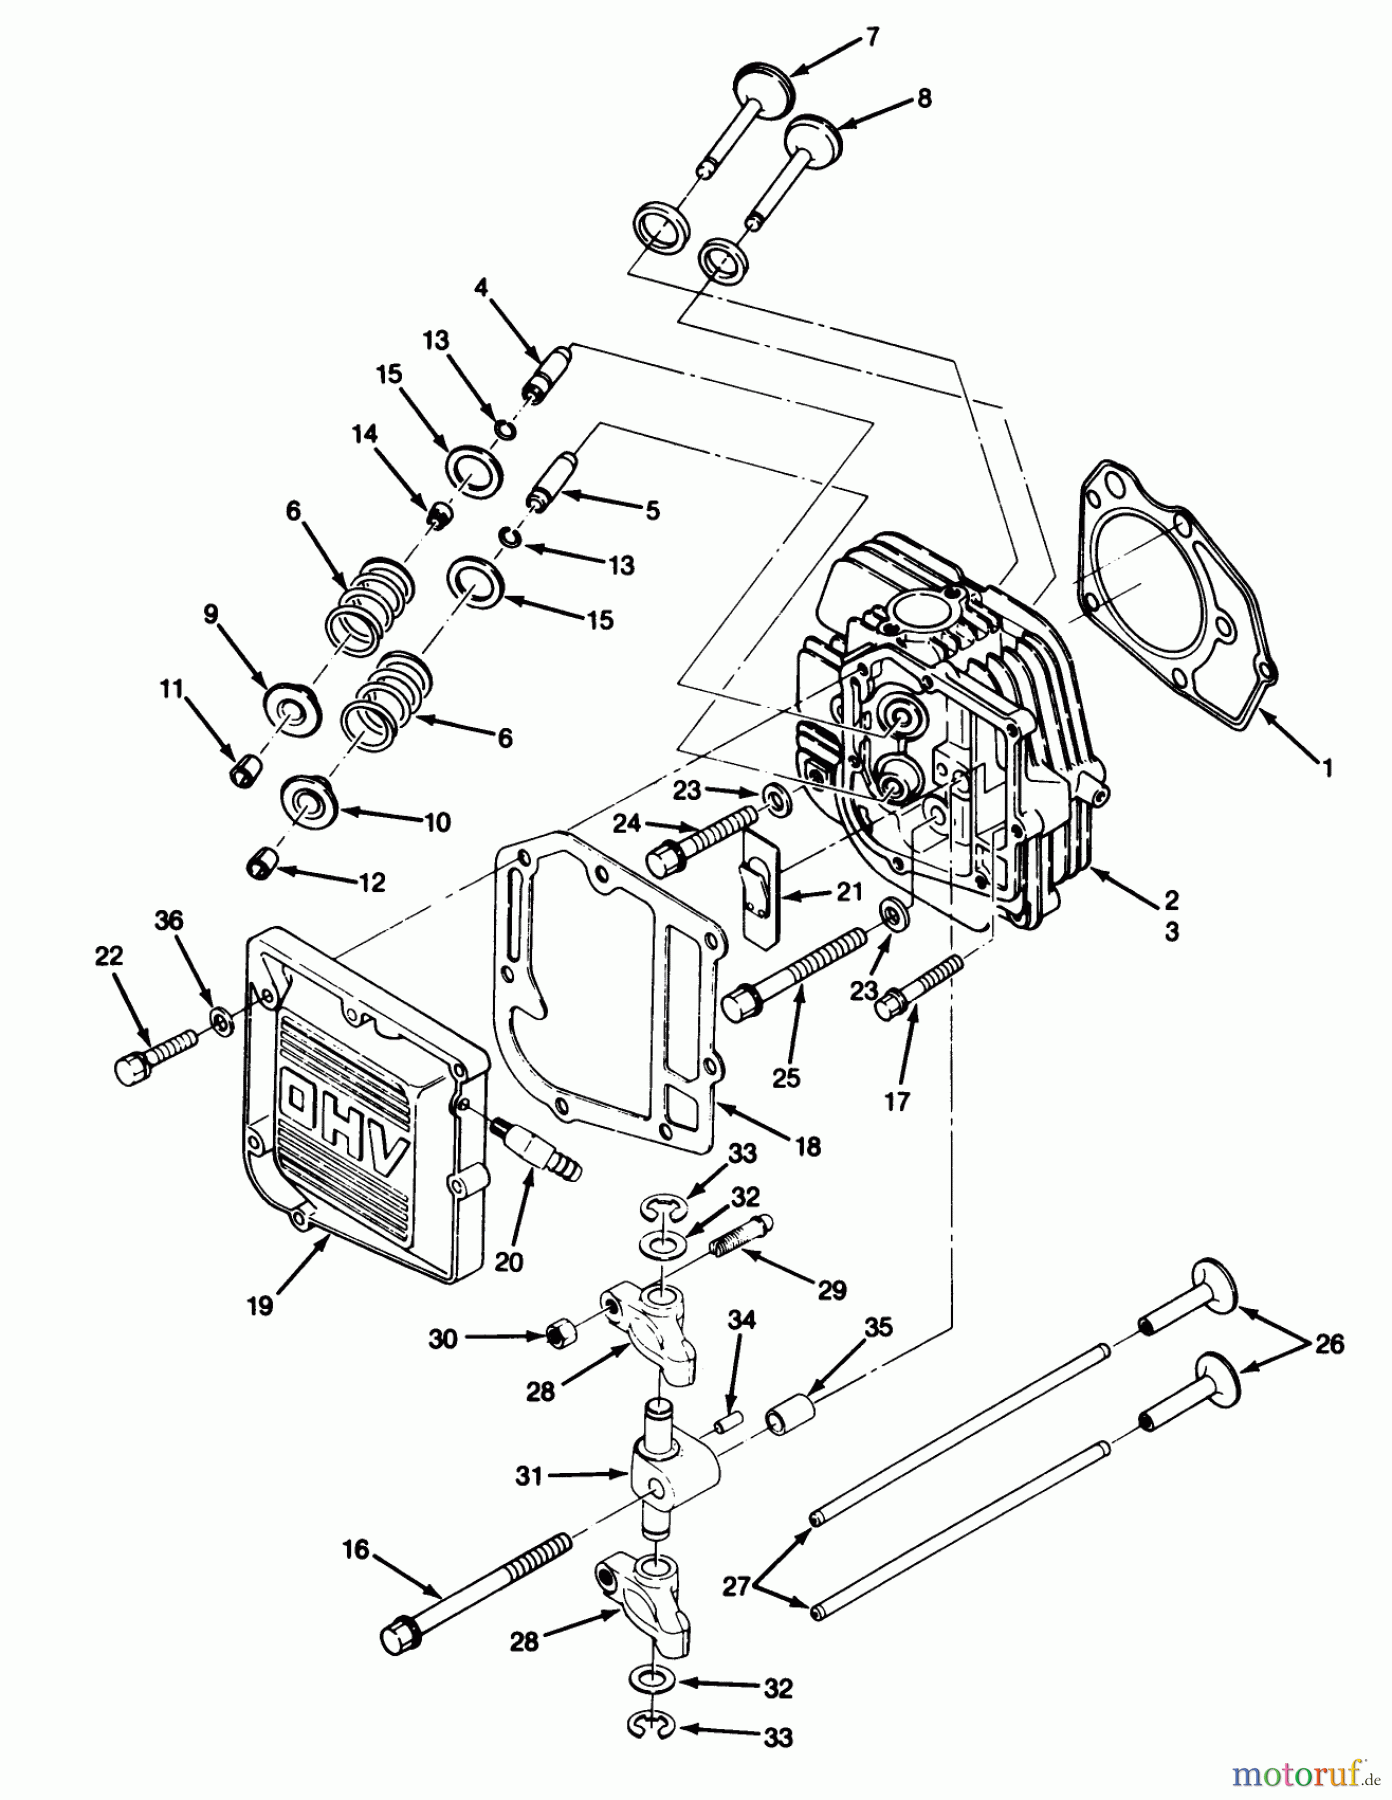  Toro Neu Mowers, Lawn & Garden Tractor Seite 1 32-12OE01 (212-H) - Toro 212-H Tractor, 1990 CYLINDER HEAD AND VALVES